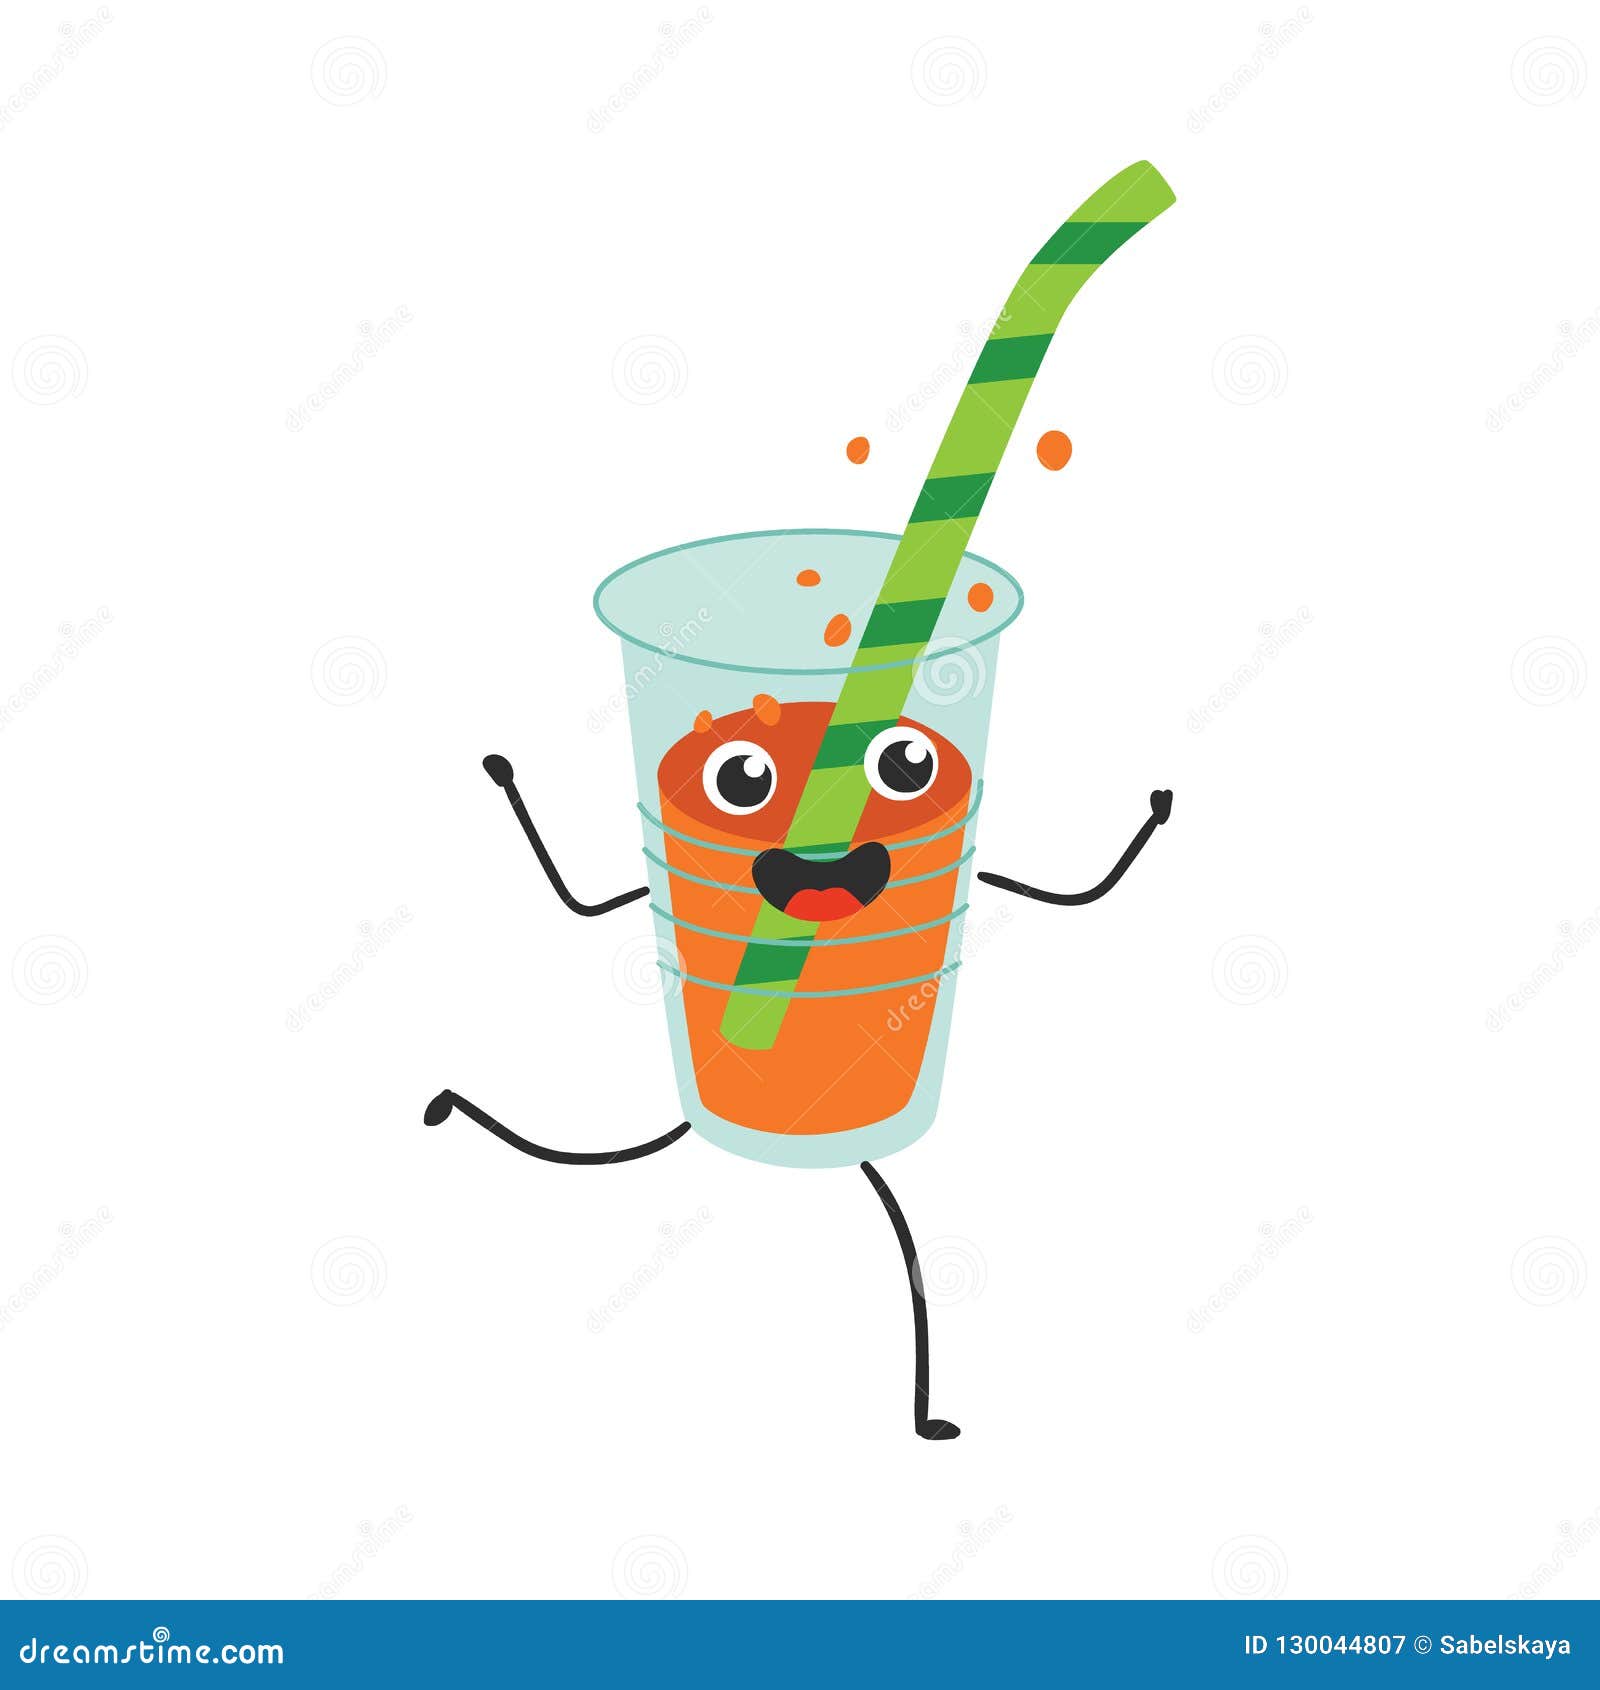 Cartoon Plastic Cup of Soda Drink with Straw, Vectors